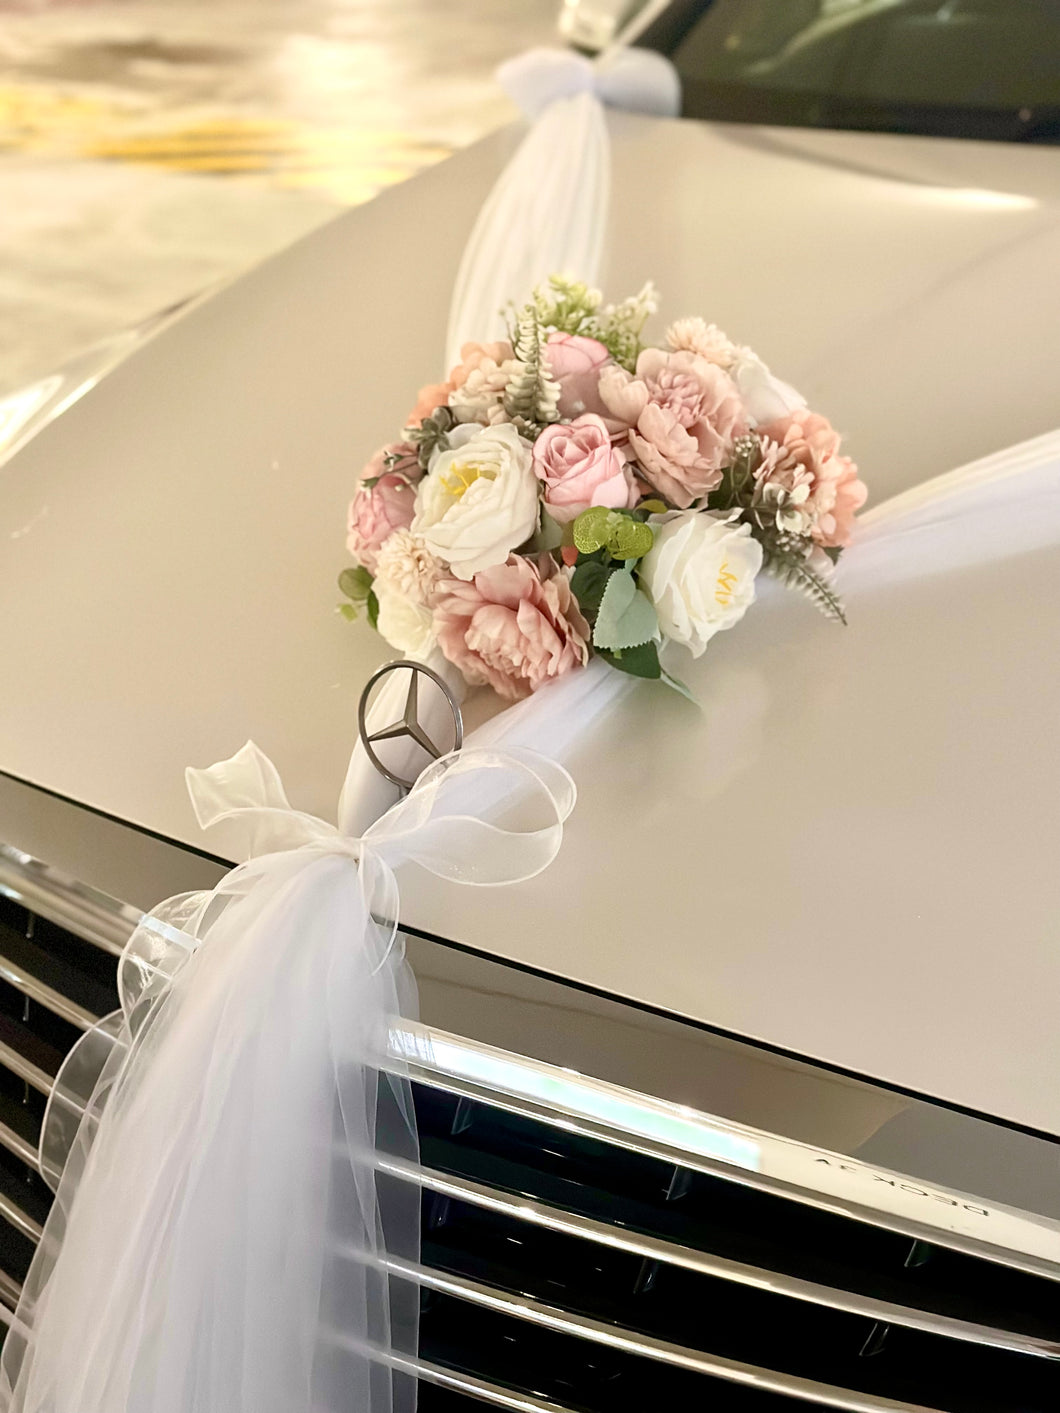 Bridal car decoration (Standard with sash)